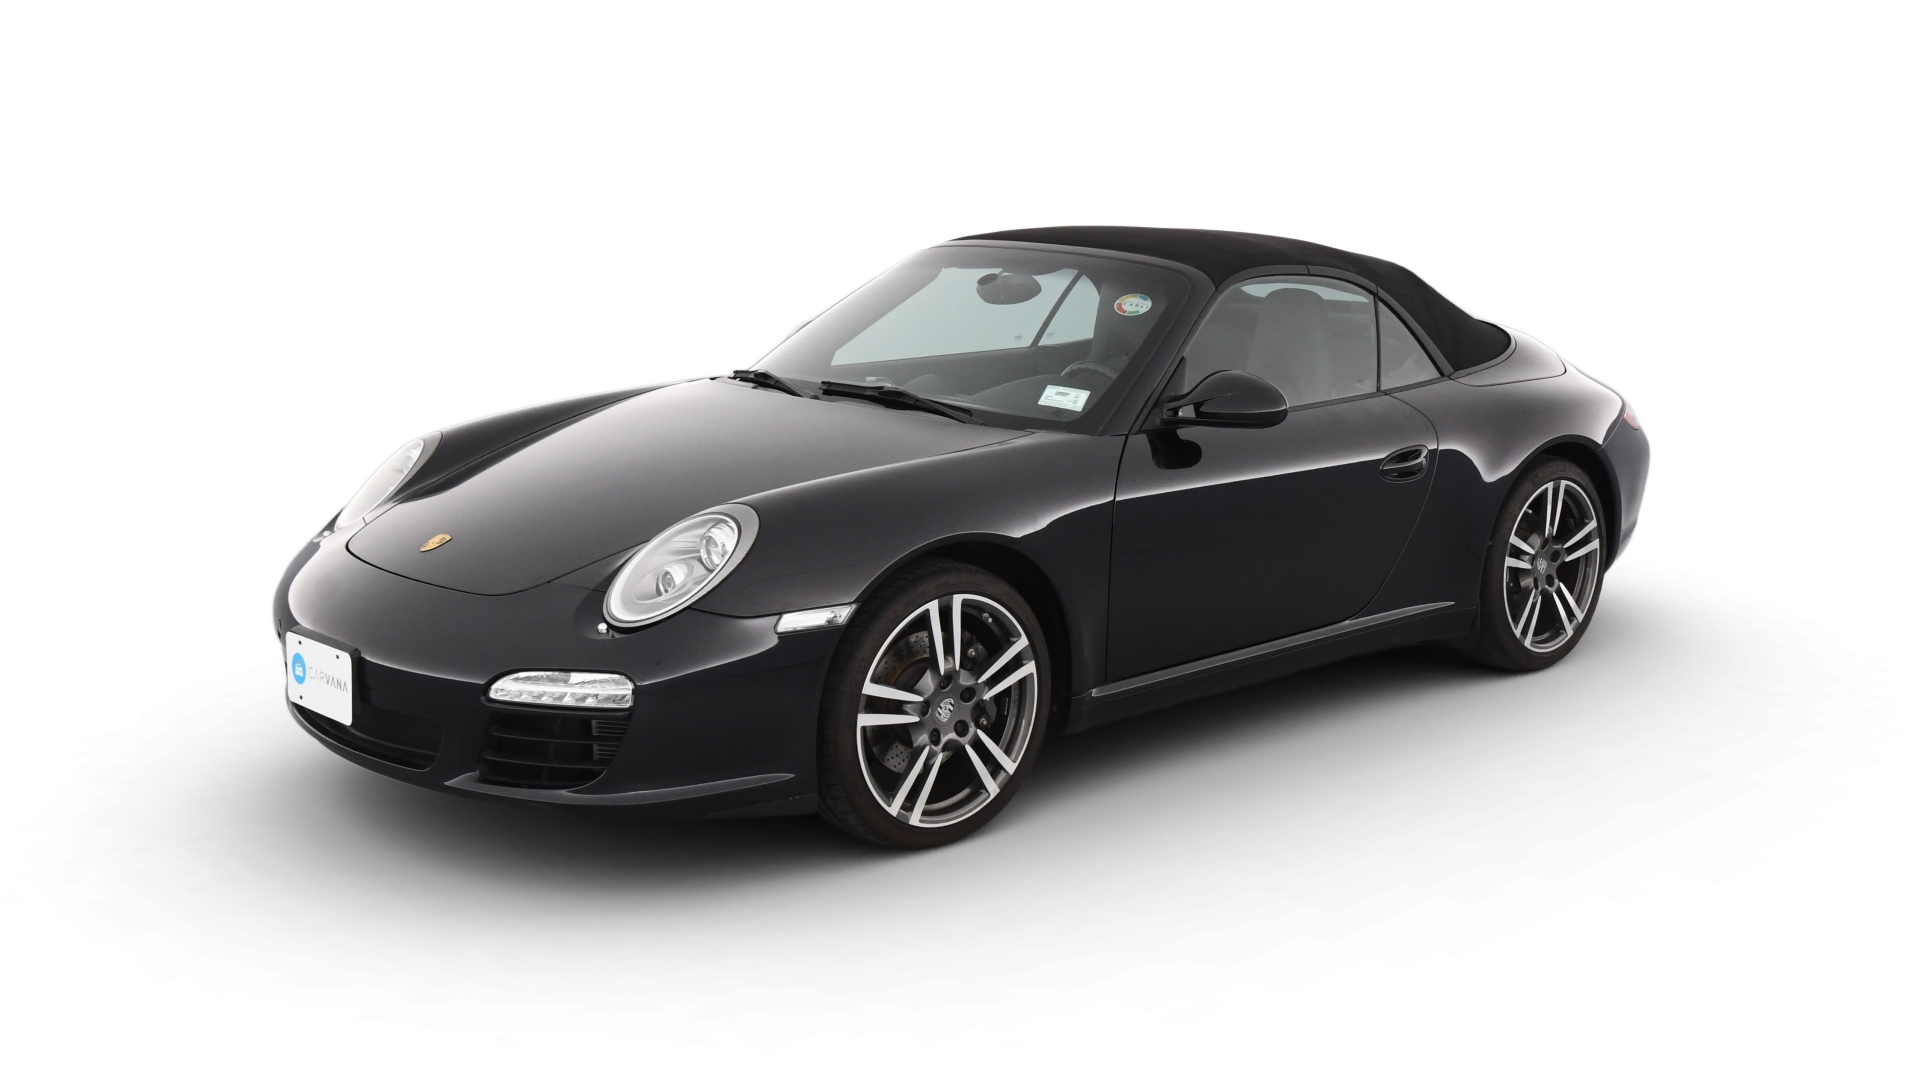 Porsche 911 model image.